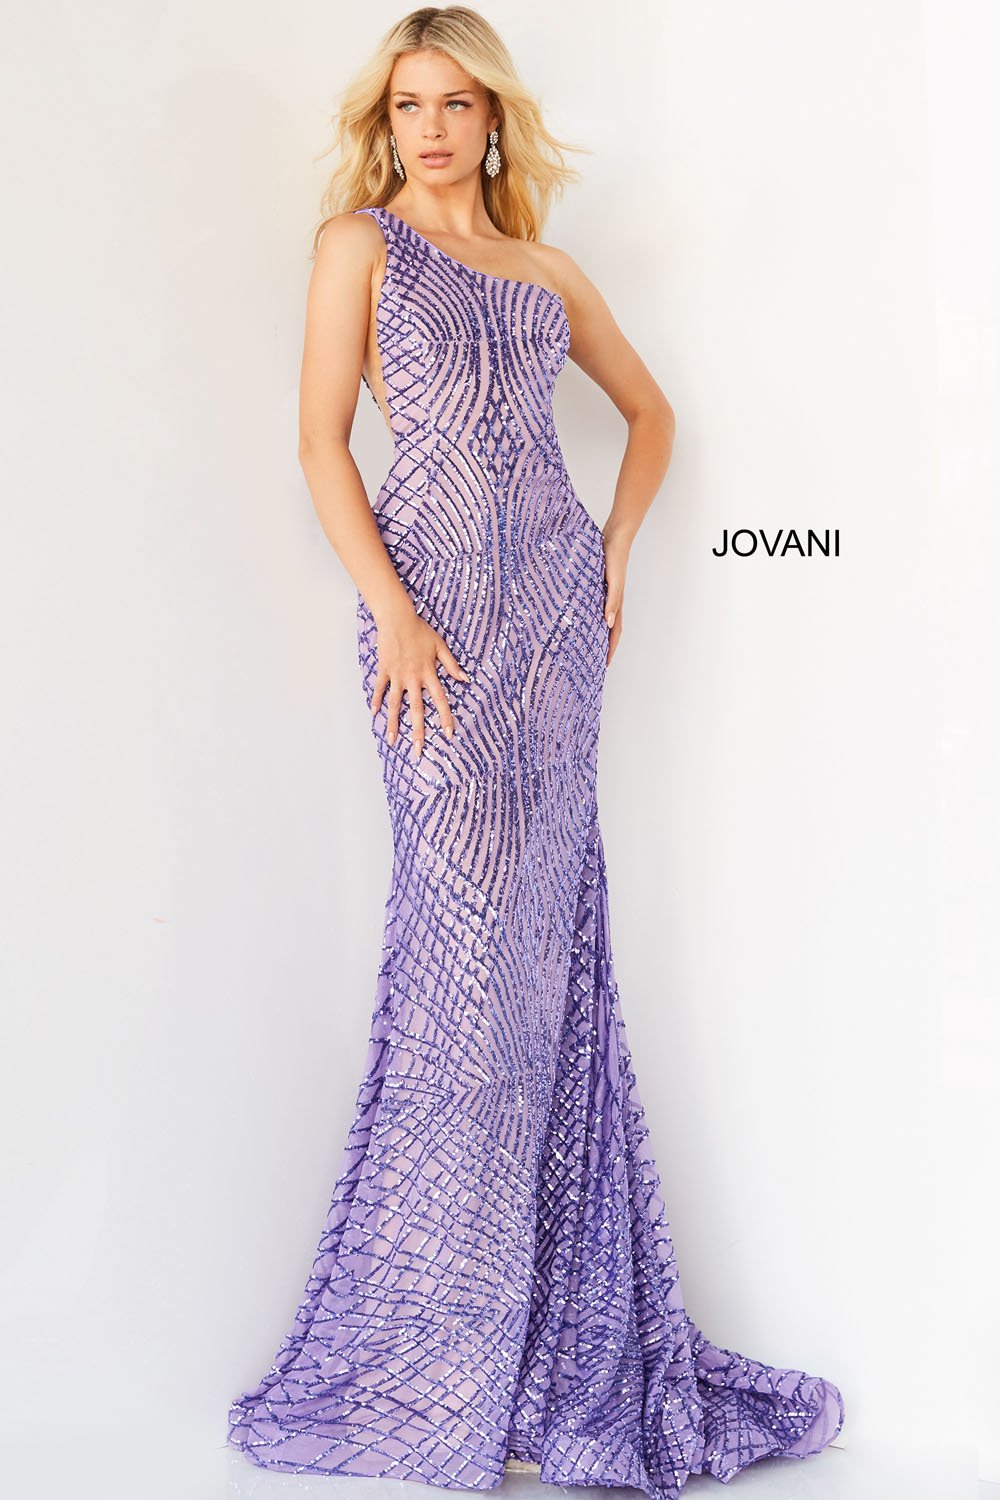 Jovani 06517 Lilac prom dresses images.